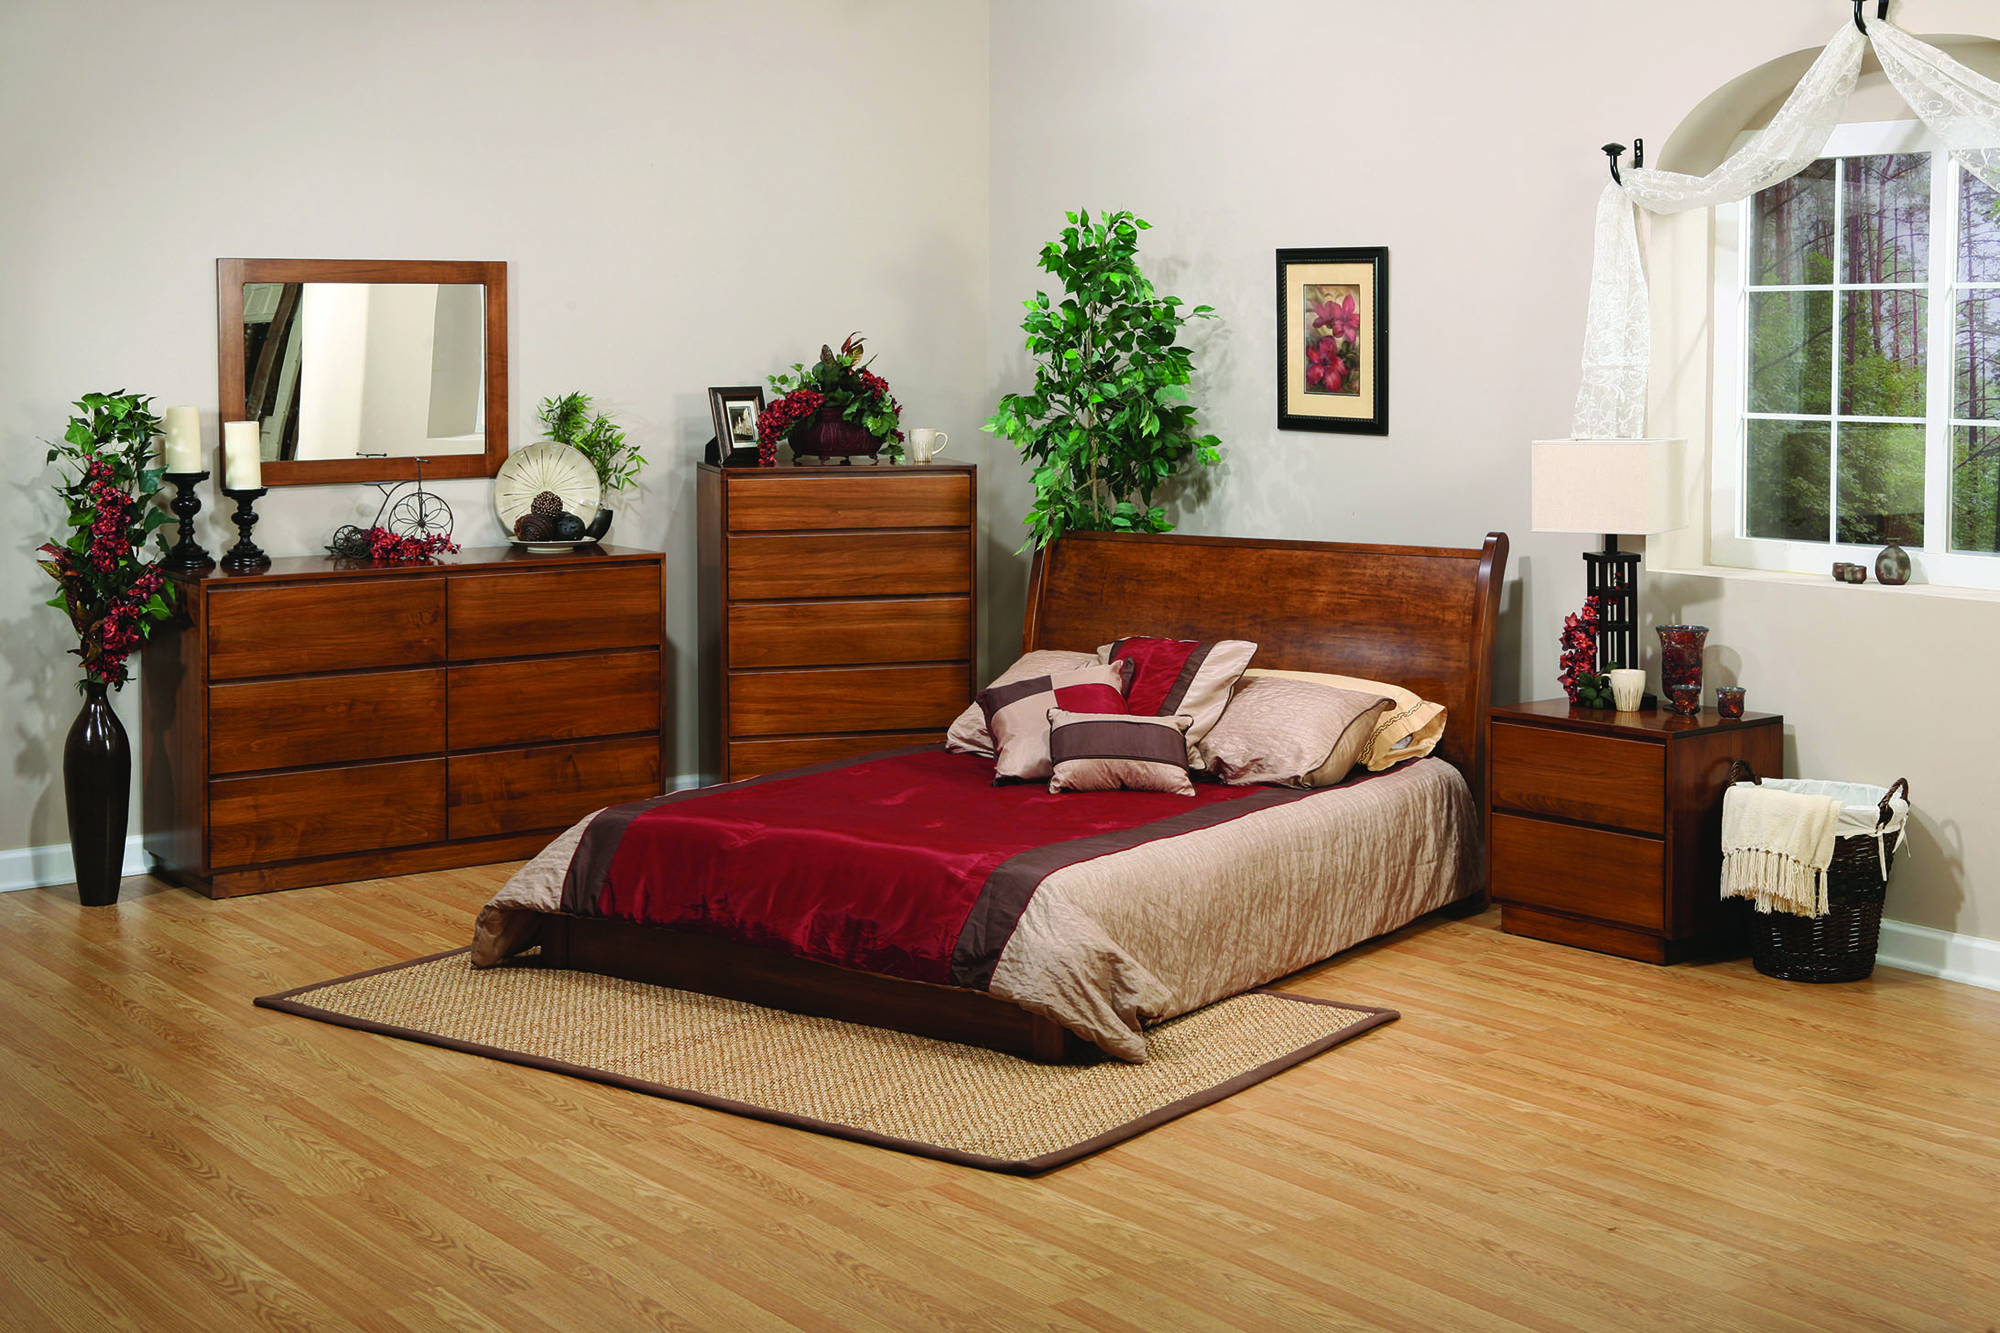 canterbury bedroom furniture at the range